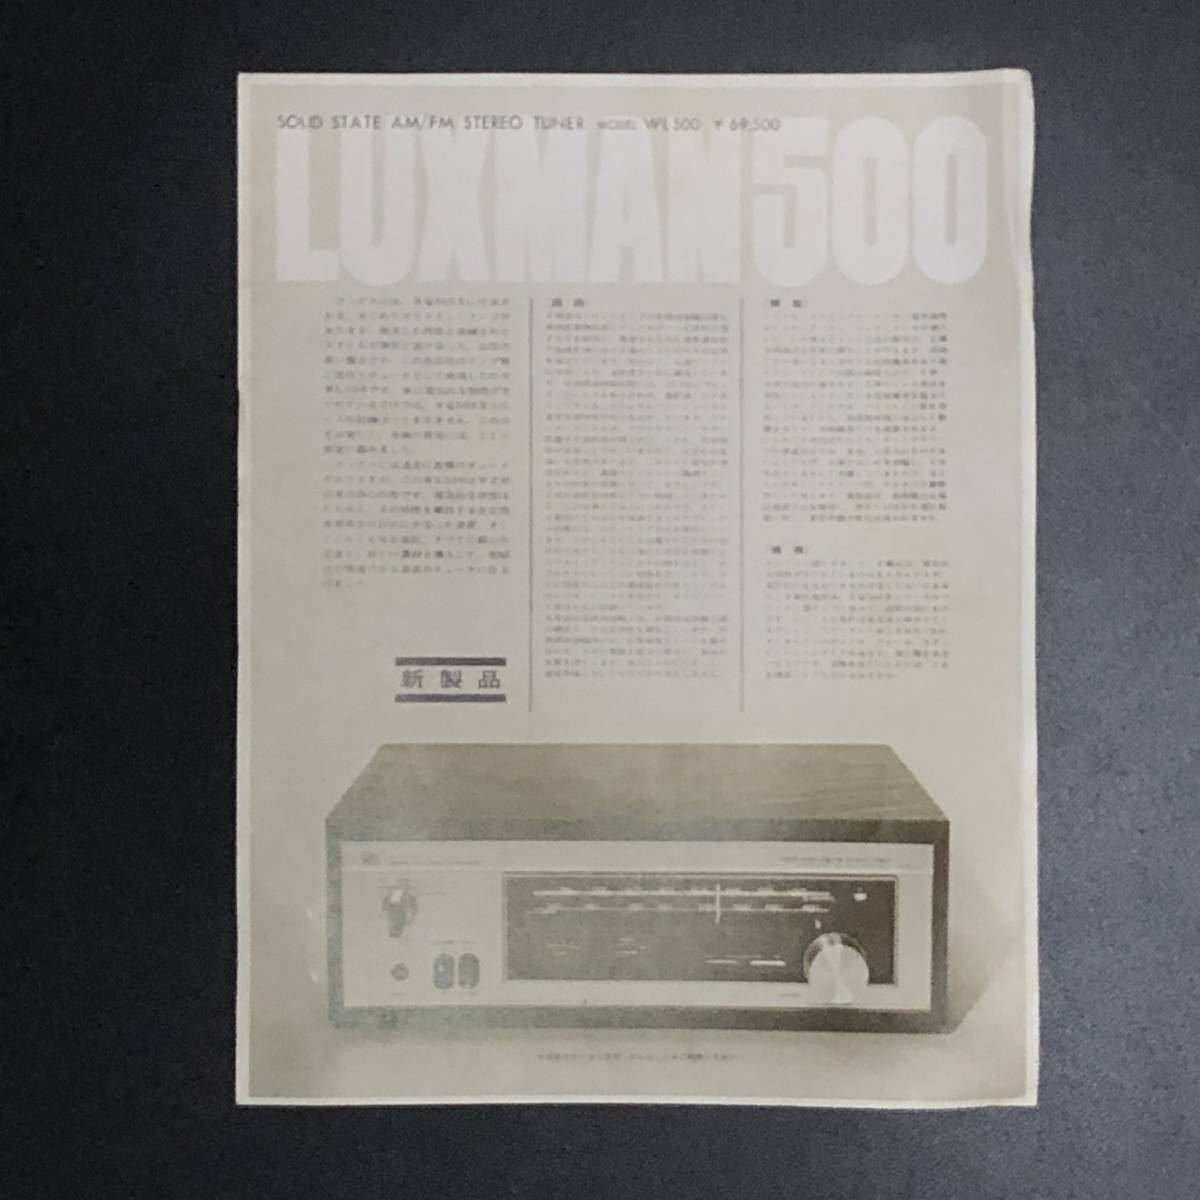 L【 руководство по эксплуатации 】LUXMAN  Luxman  　AM/FM стерео  тюнер 　WL500　 каталог  включено 